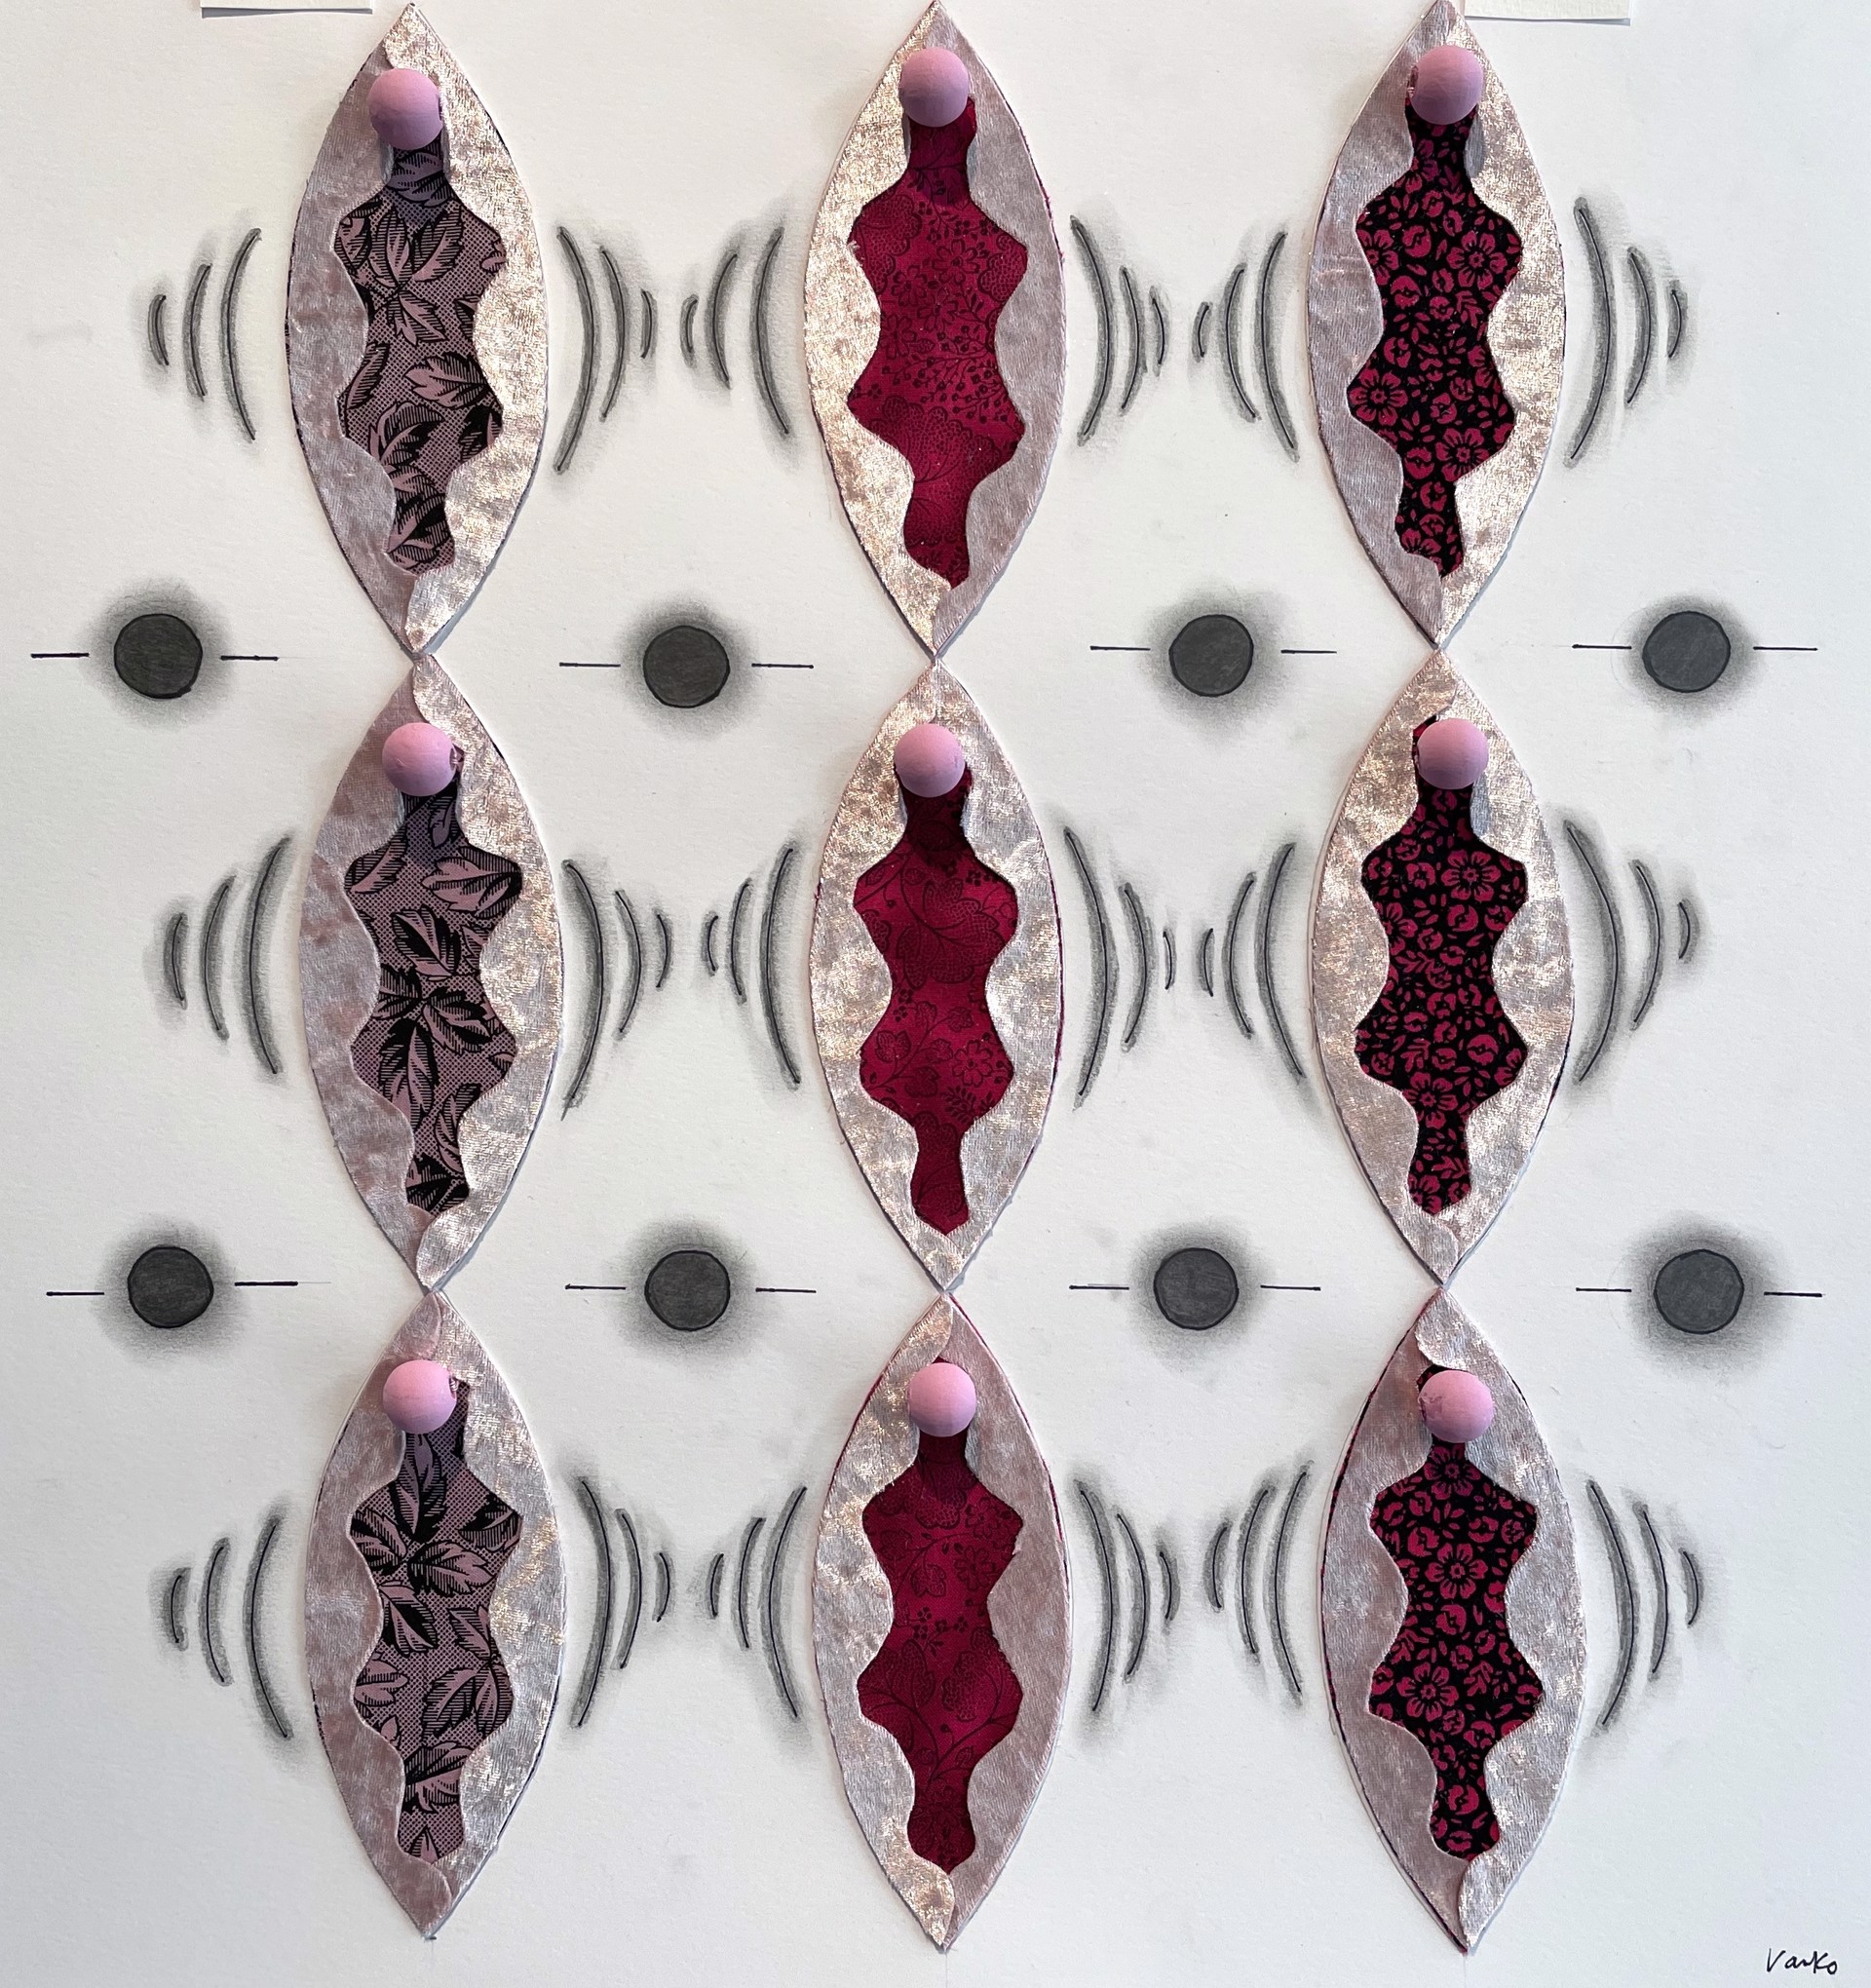 Large Pink Vibrating Vulvas (6 vulvas) by Deborah Vanko